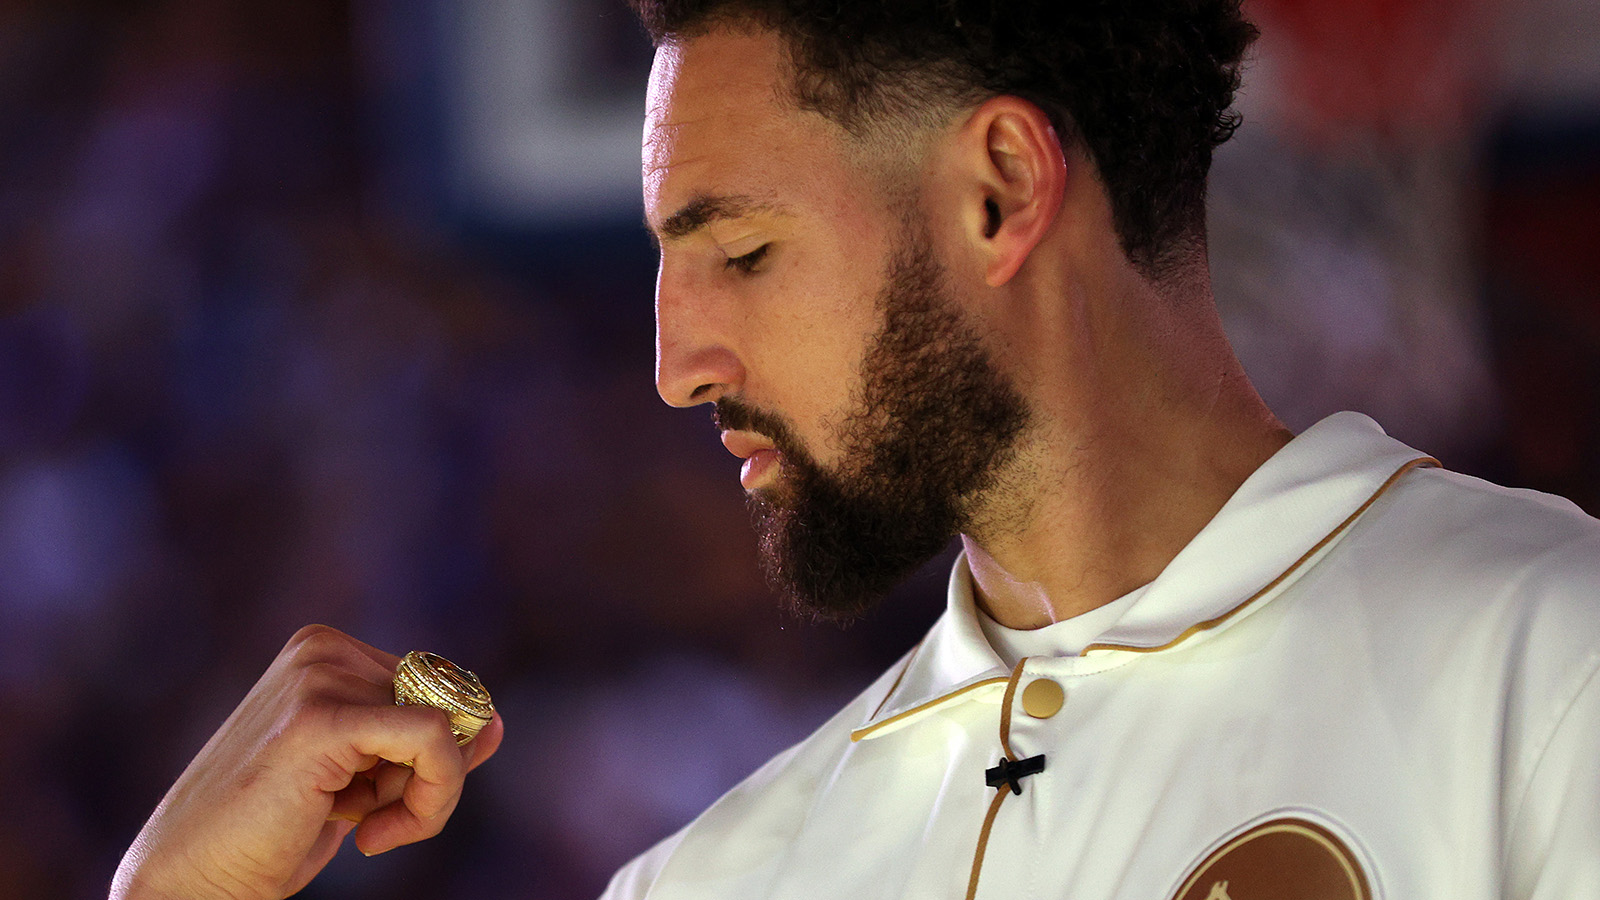 Spurs receive championship rings (photos) - NBC Sports